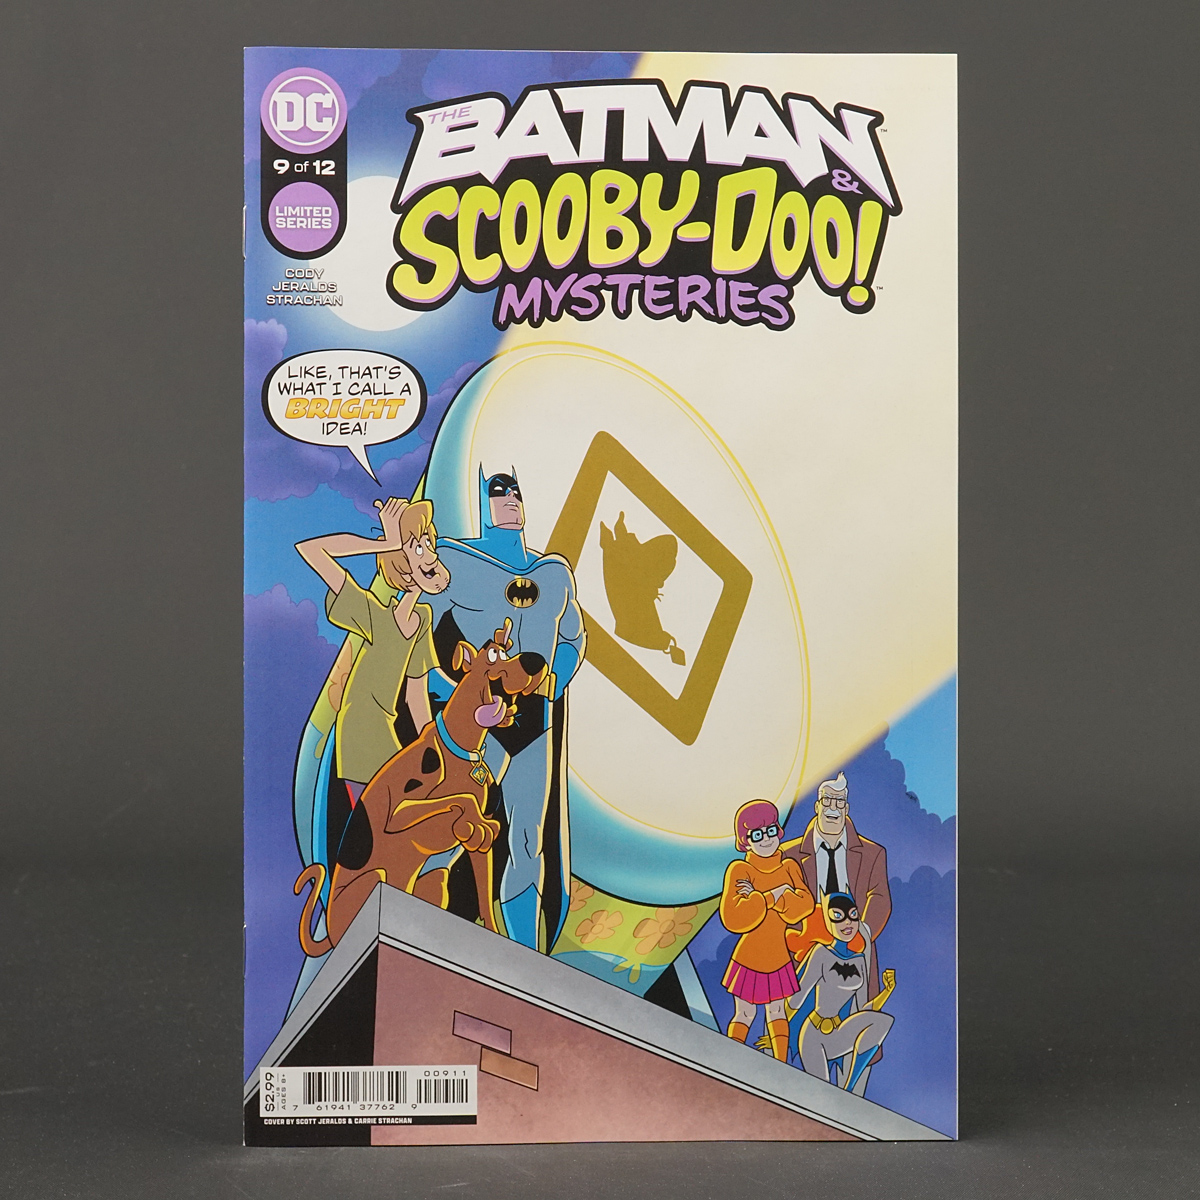 BATMAN & SCOOBY-DOO MYSTERIES #9 DC Comics 0423DC213 (A/CA) Jeralds (W) Cody